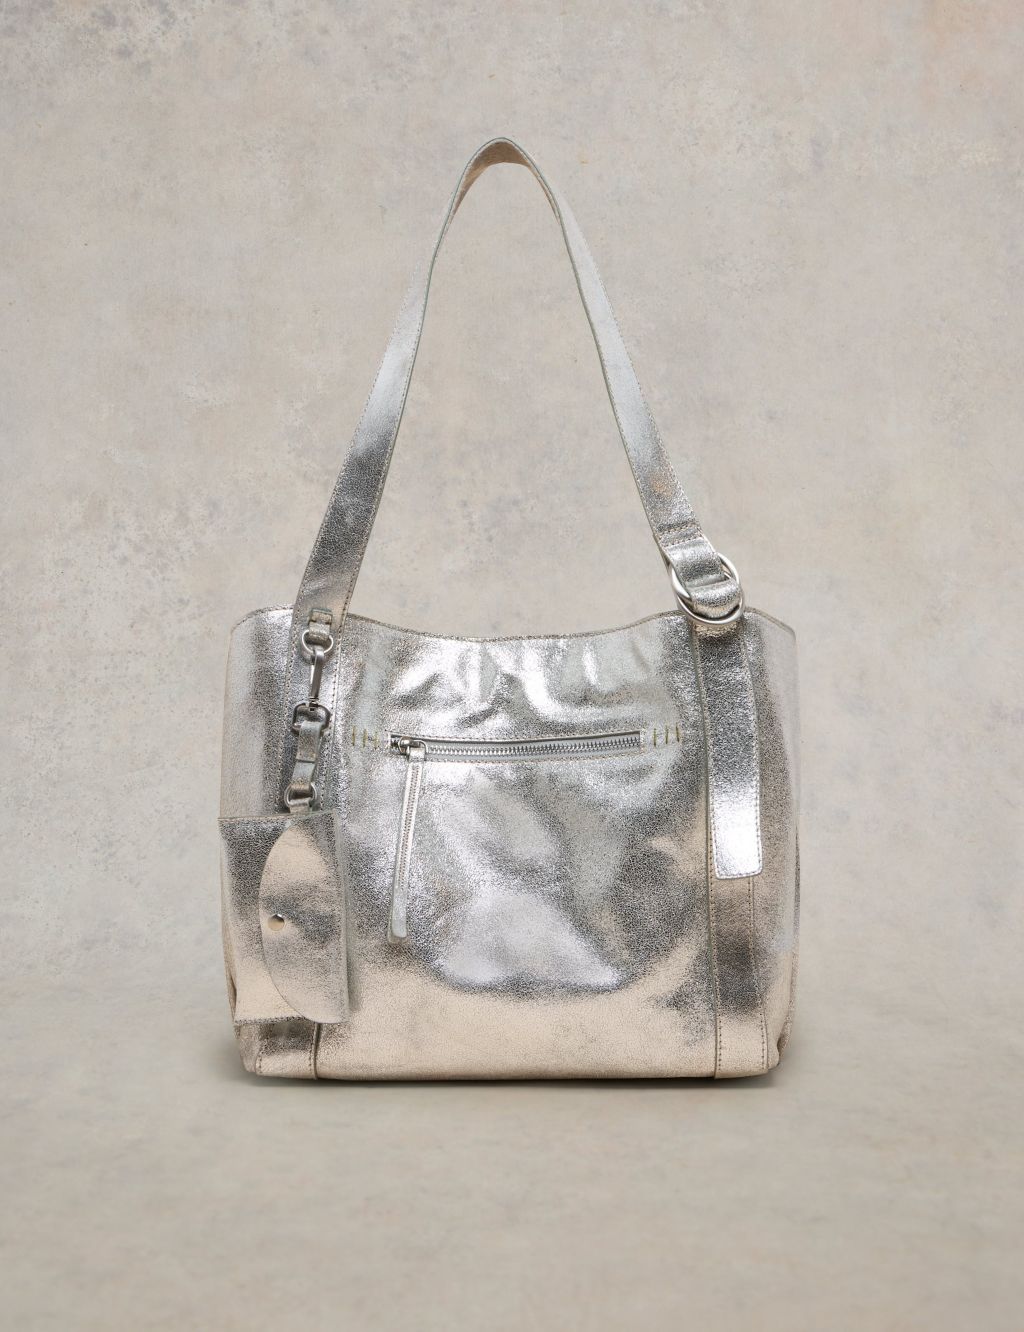 Leather Metallic Tote Bag image 1